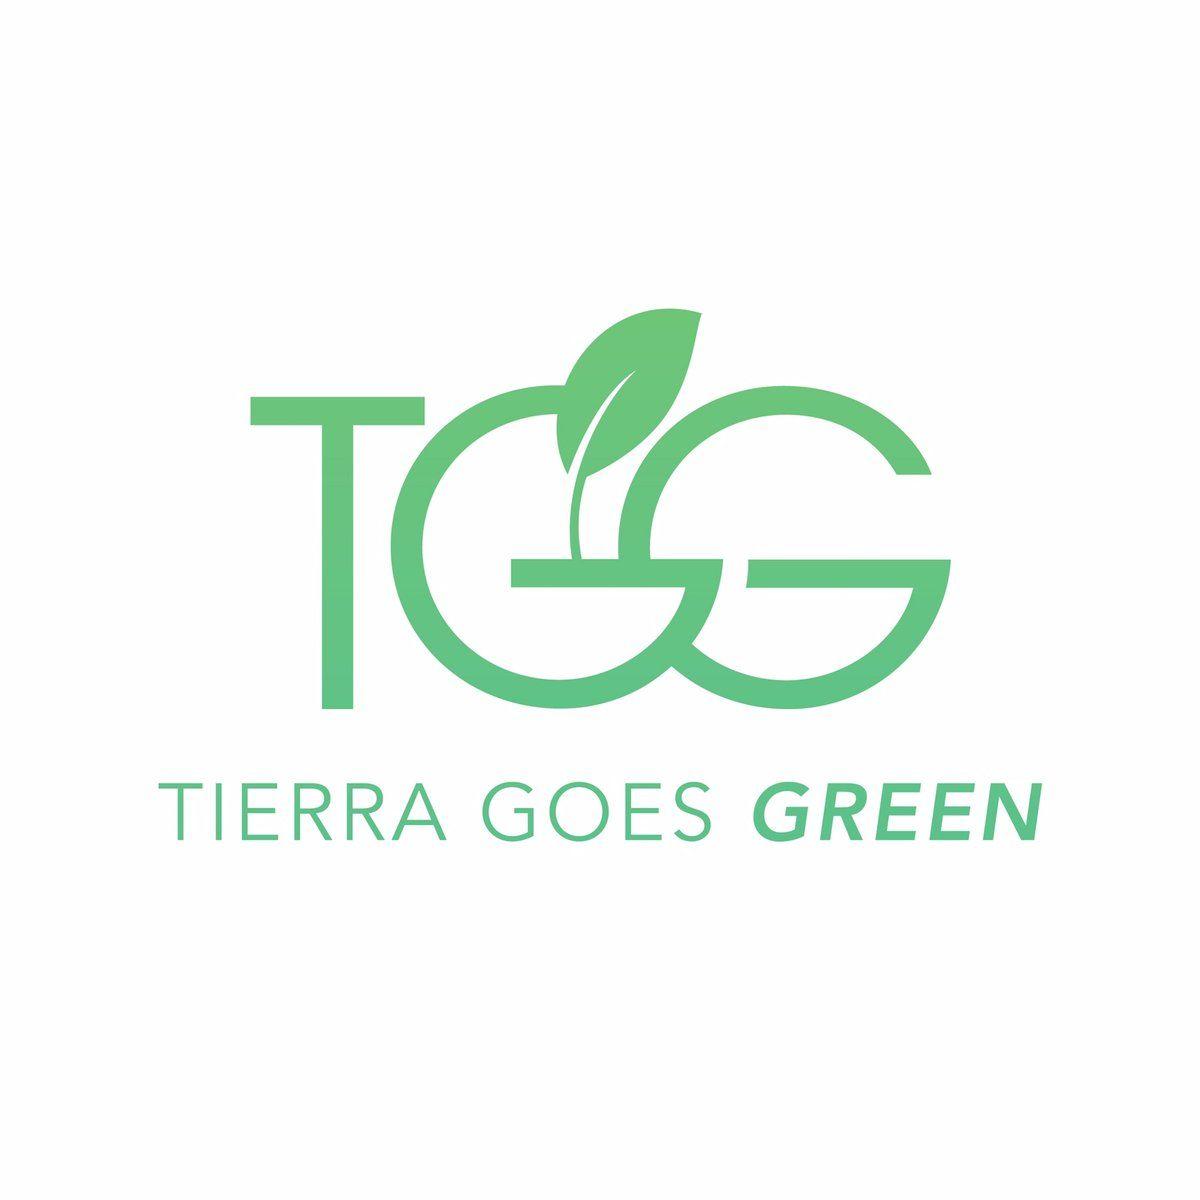 TGG Logo - TALK WITH TIERRA